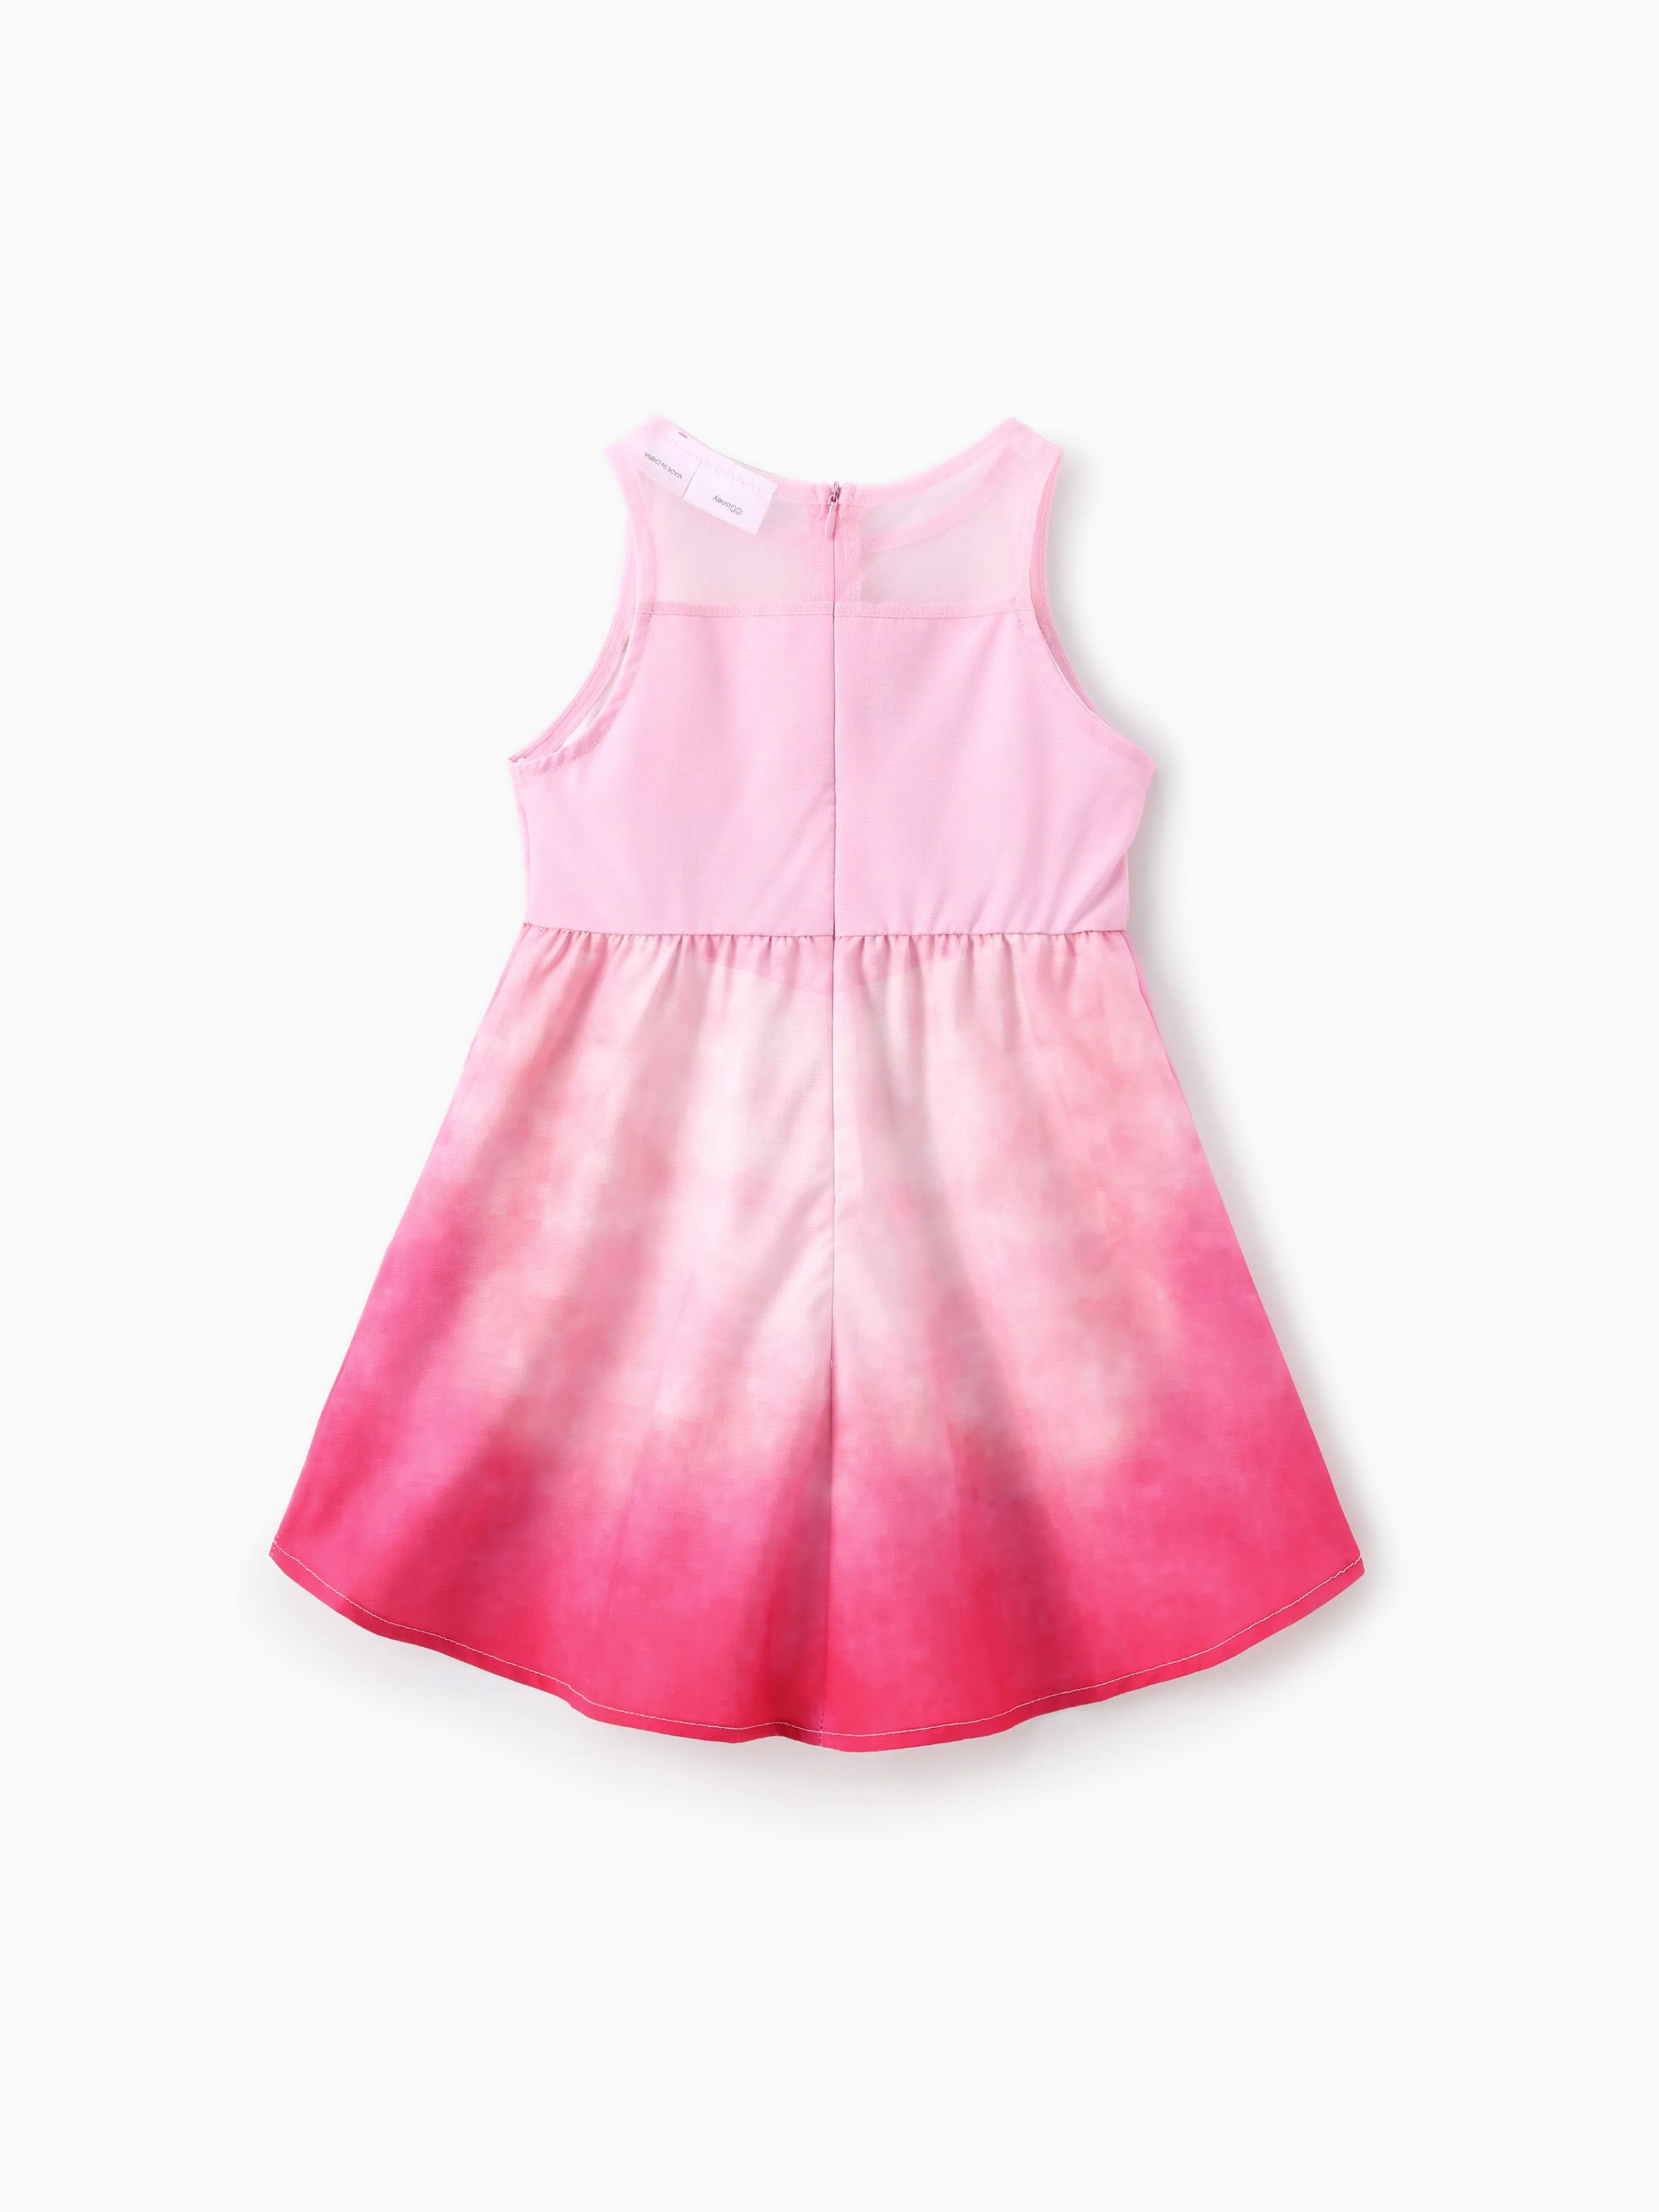 

Disney Princess Toddler Girls Ariel/Cinderella 1pc Sweet Dreamy Character Tie-dye Print Sleeveless Dress